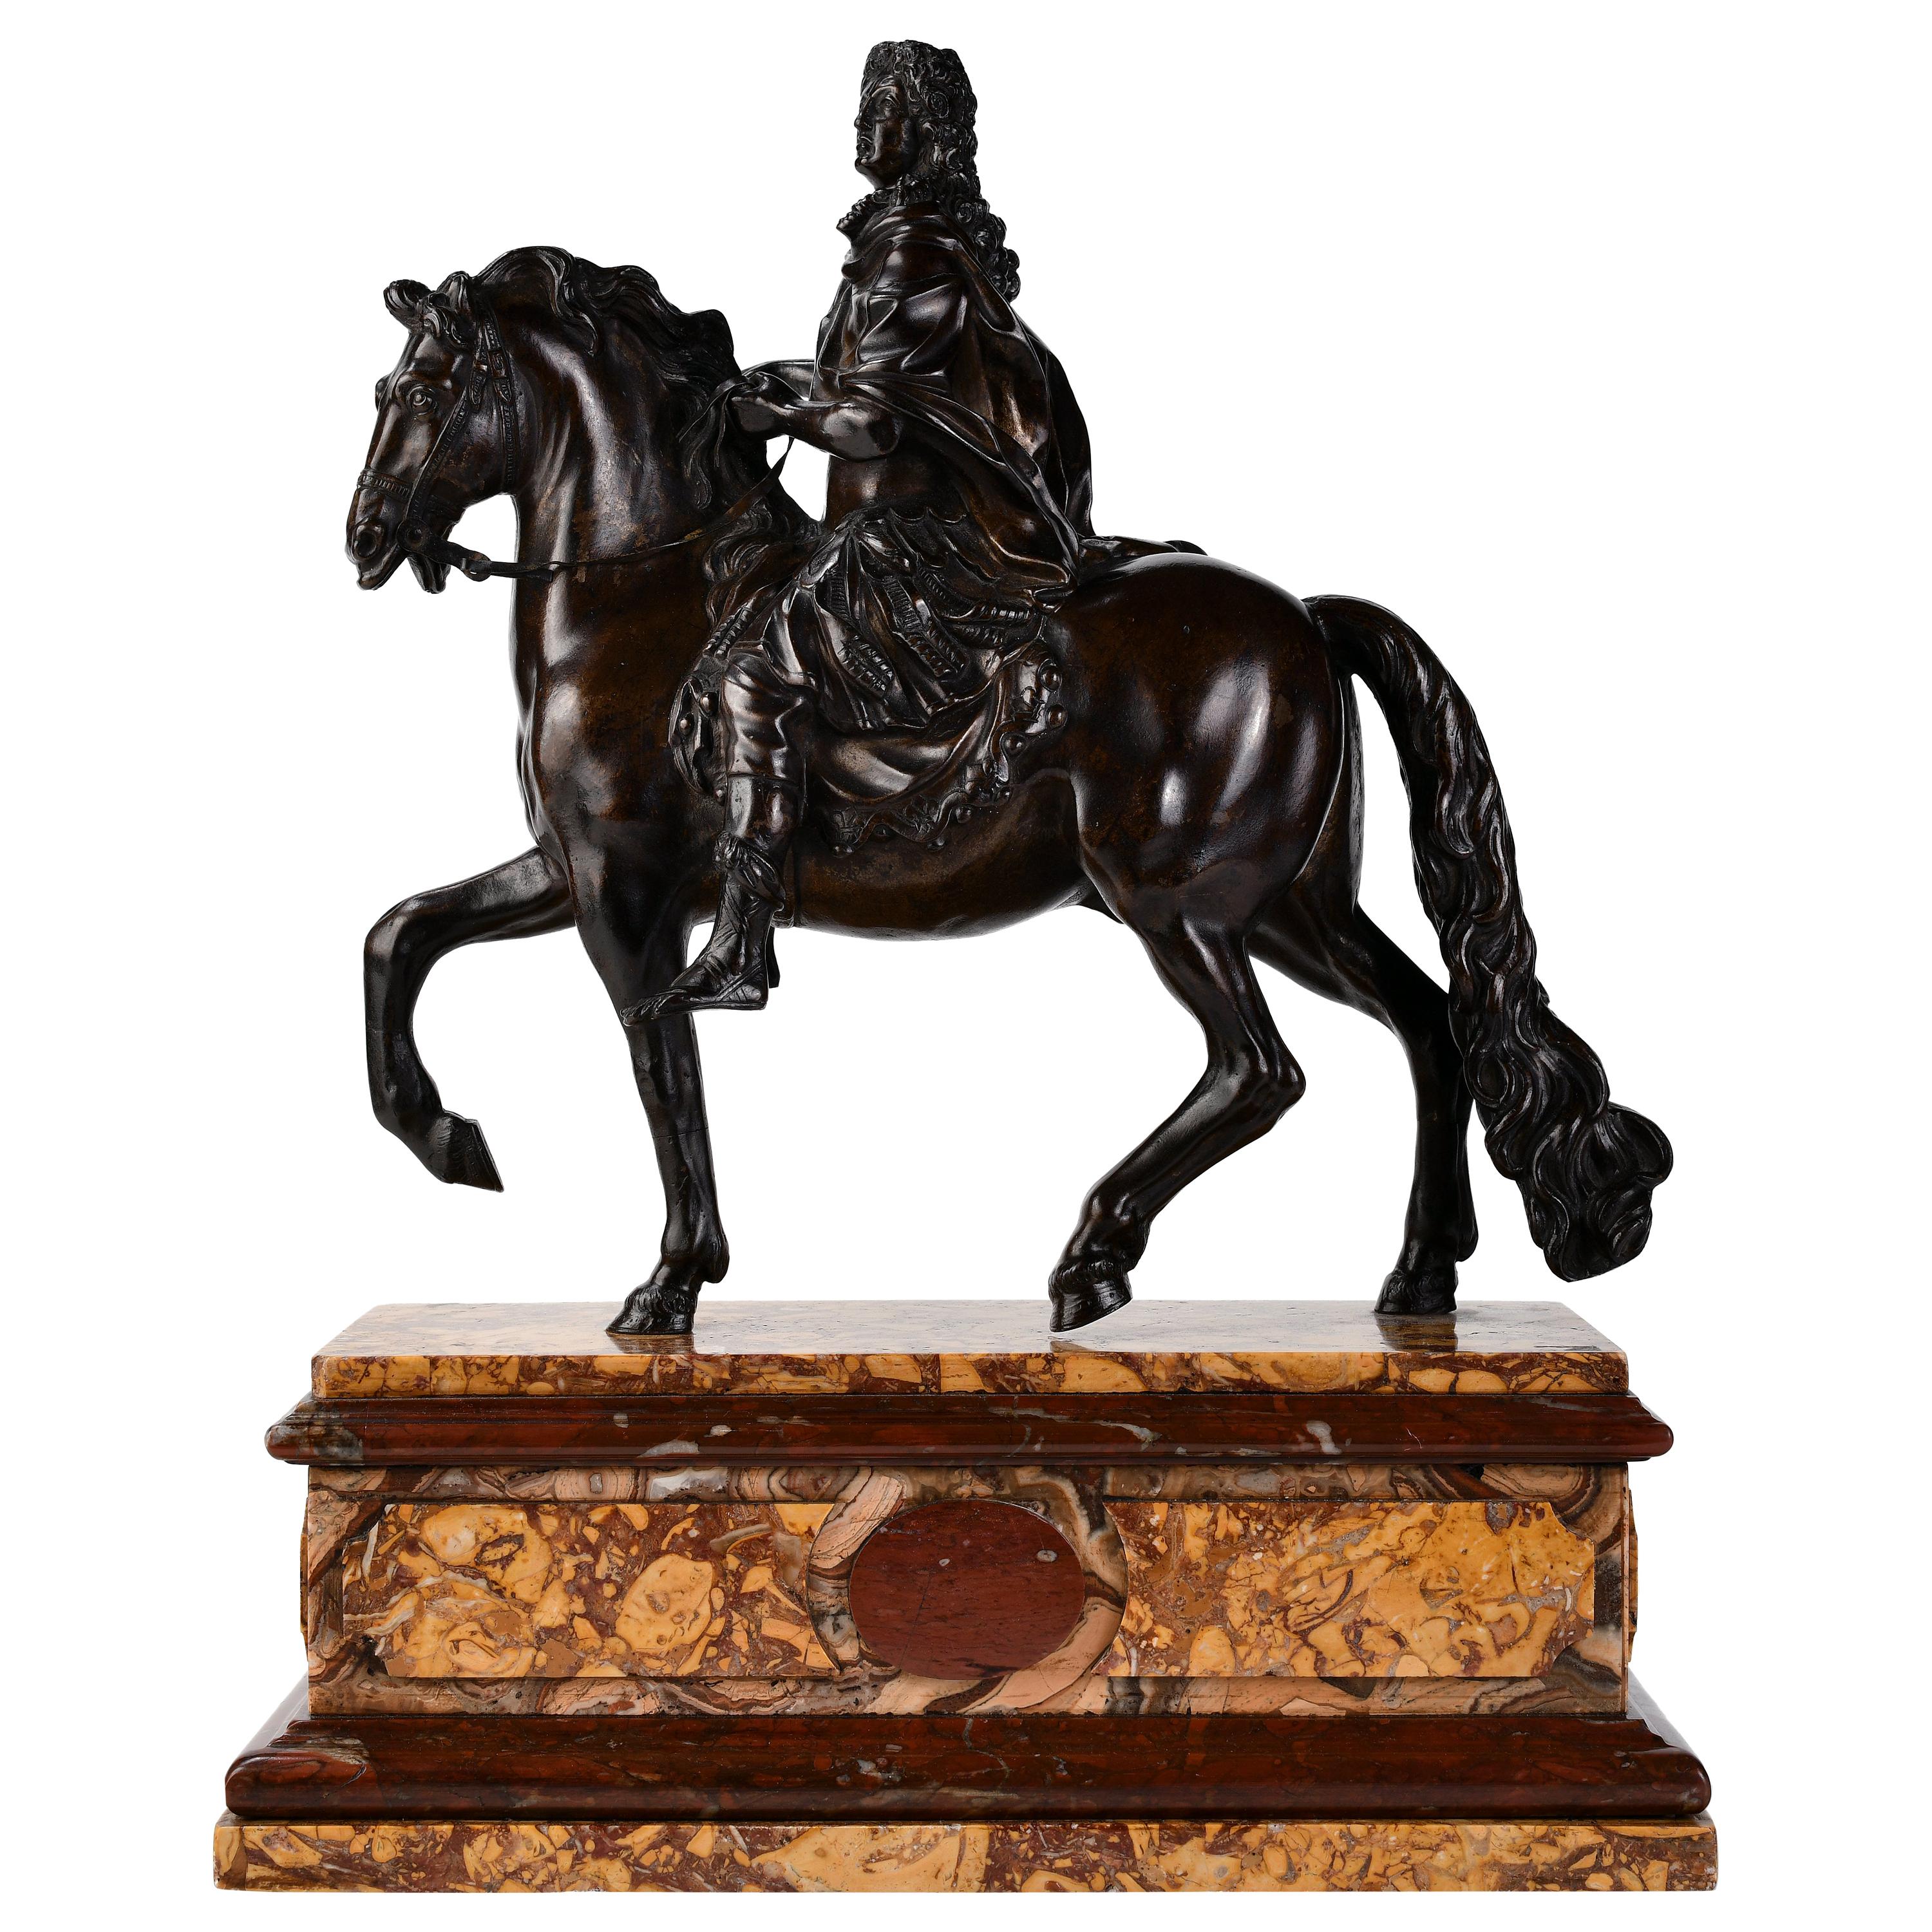 French Iron Sculpture of Louis XIV on Horseback, circa 1880